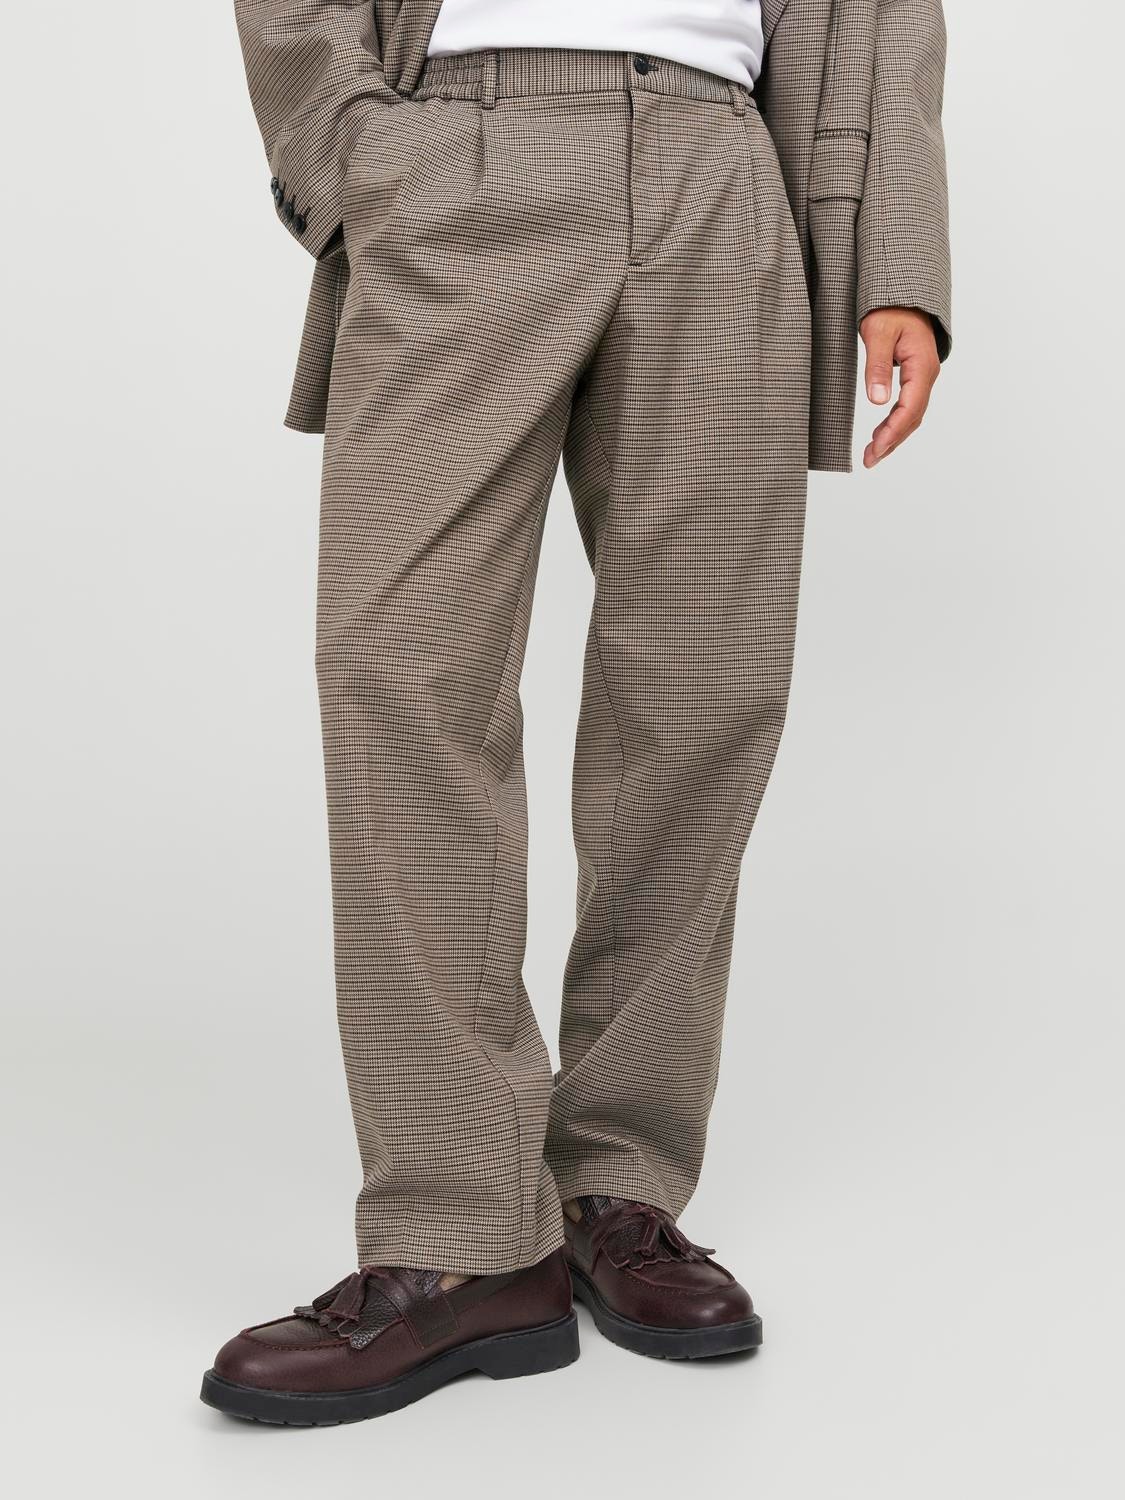 Jack & Jones Loose Fit Chino trousers -Coriander - 12247338